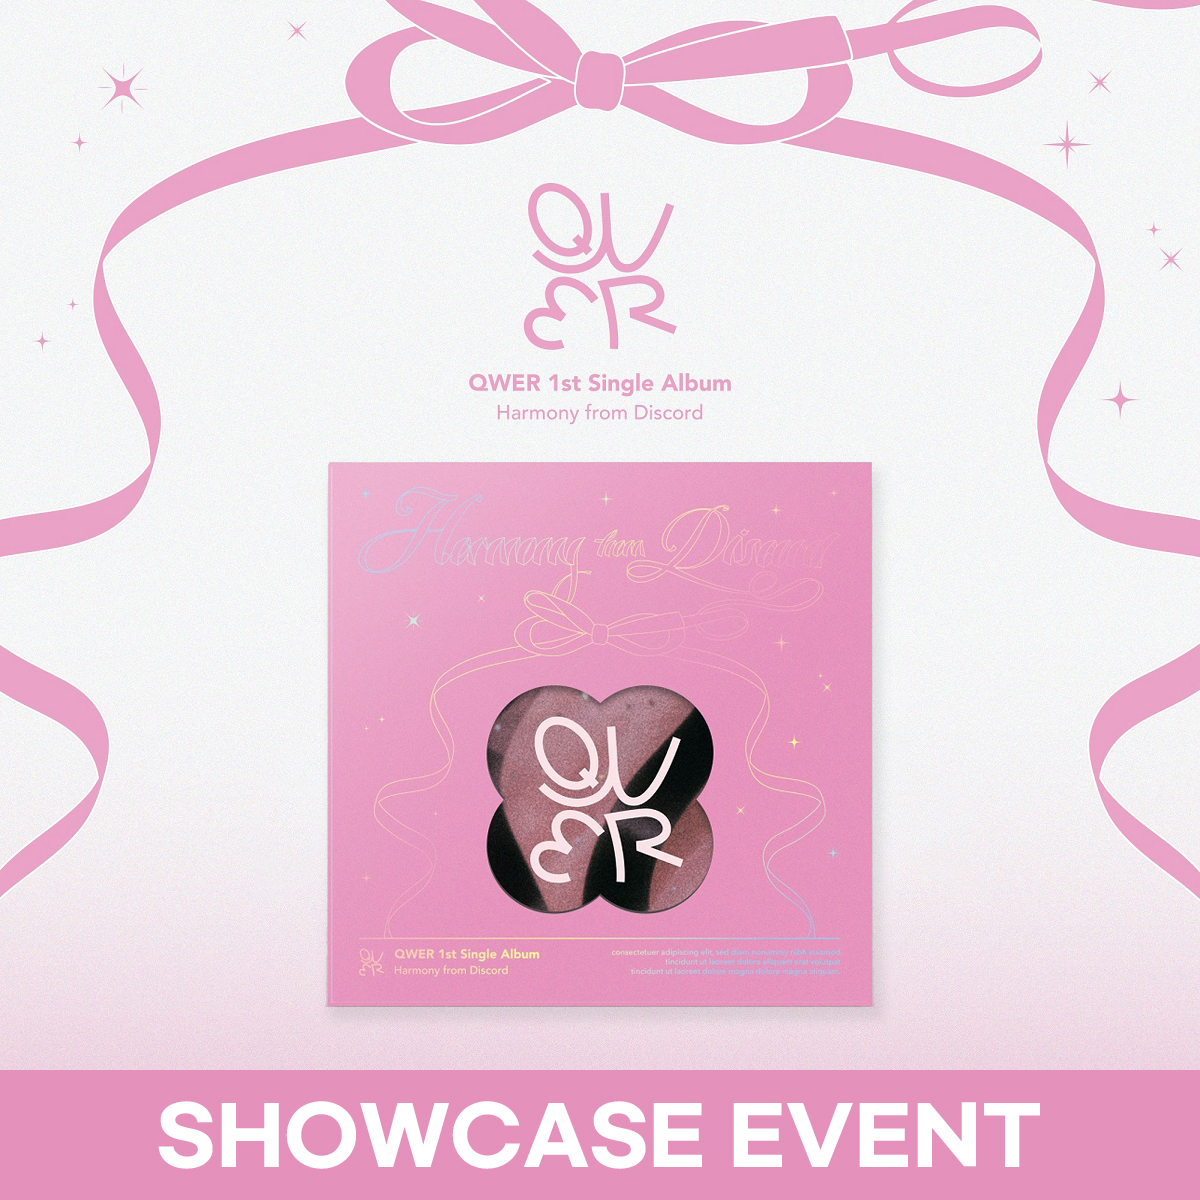 ★SHOWCASE EVENT★  QWER - 1st Single Album [Harmony from Discord]케이팝스토어(kpop store)